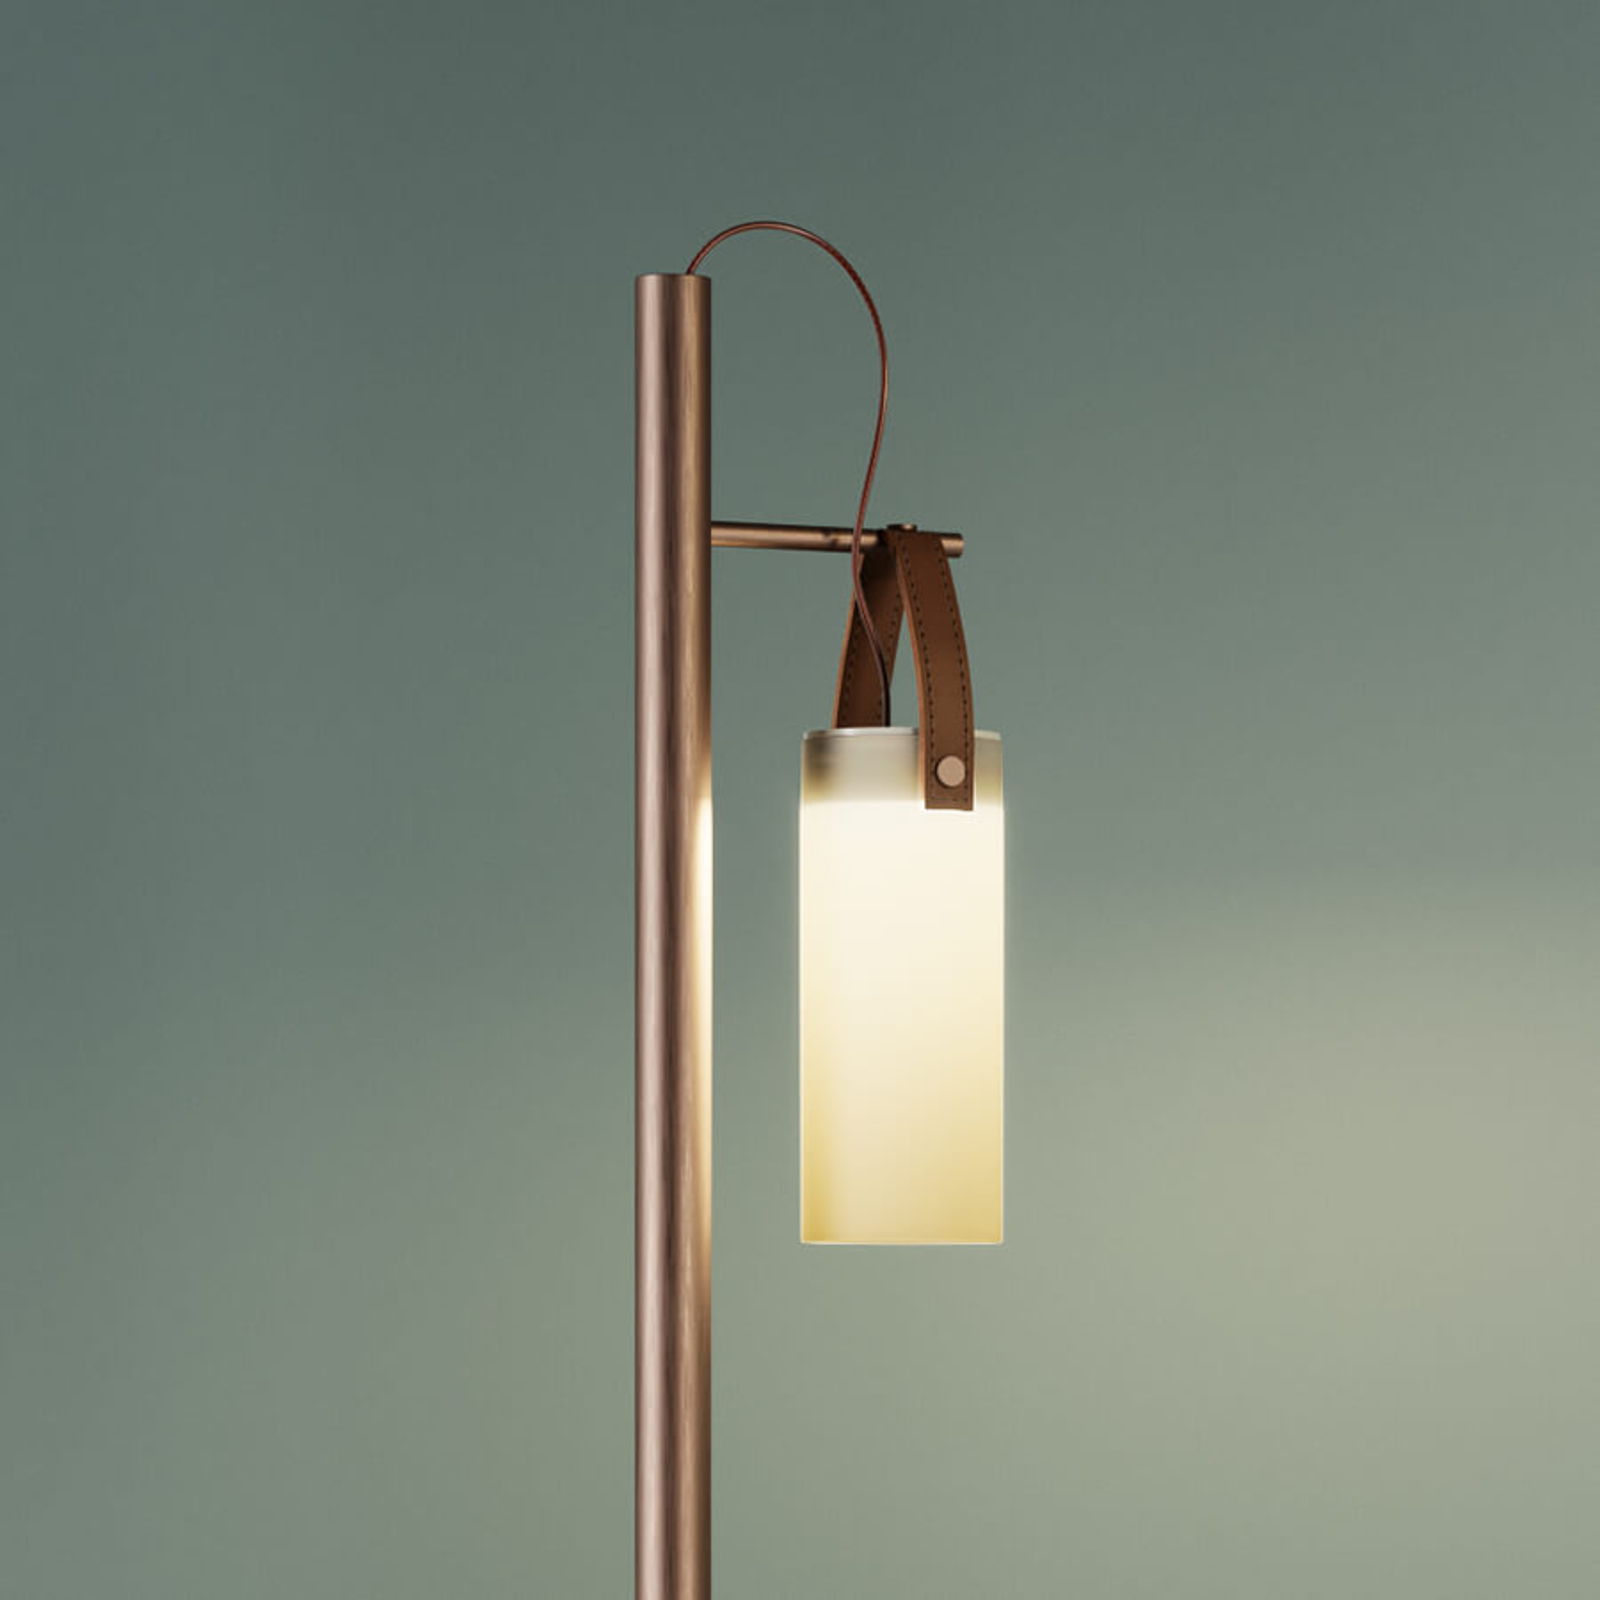 Lampadaire LED de designer Galerie, à 1 lampe